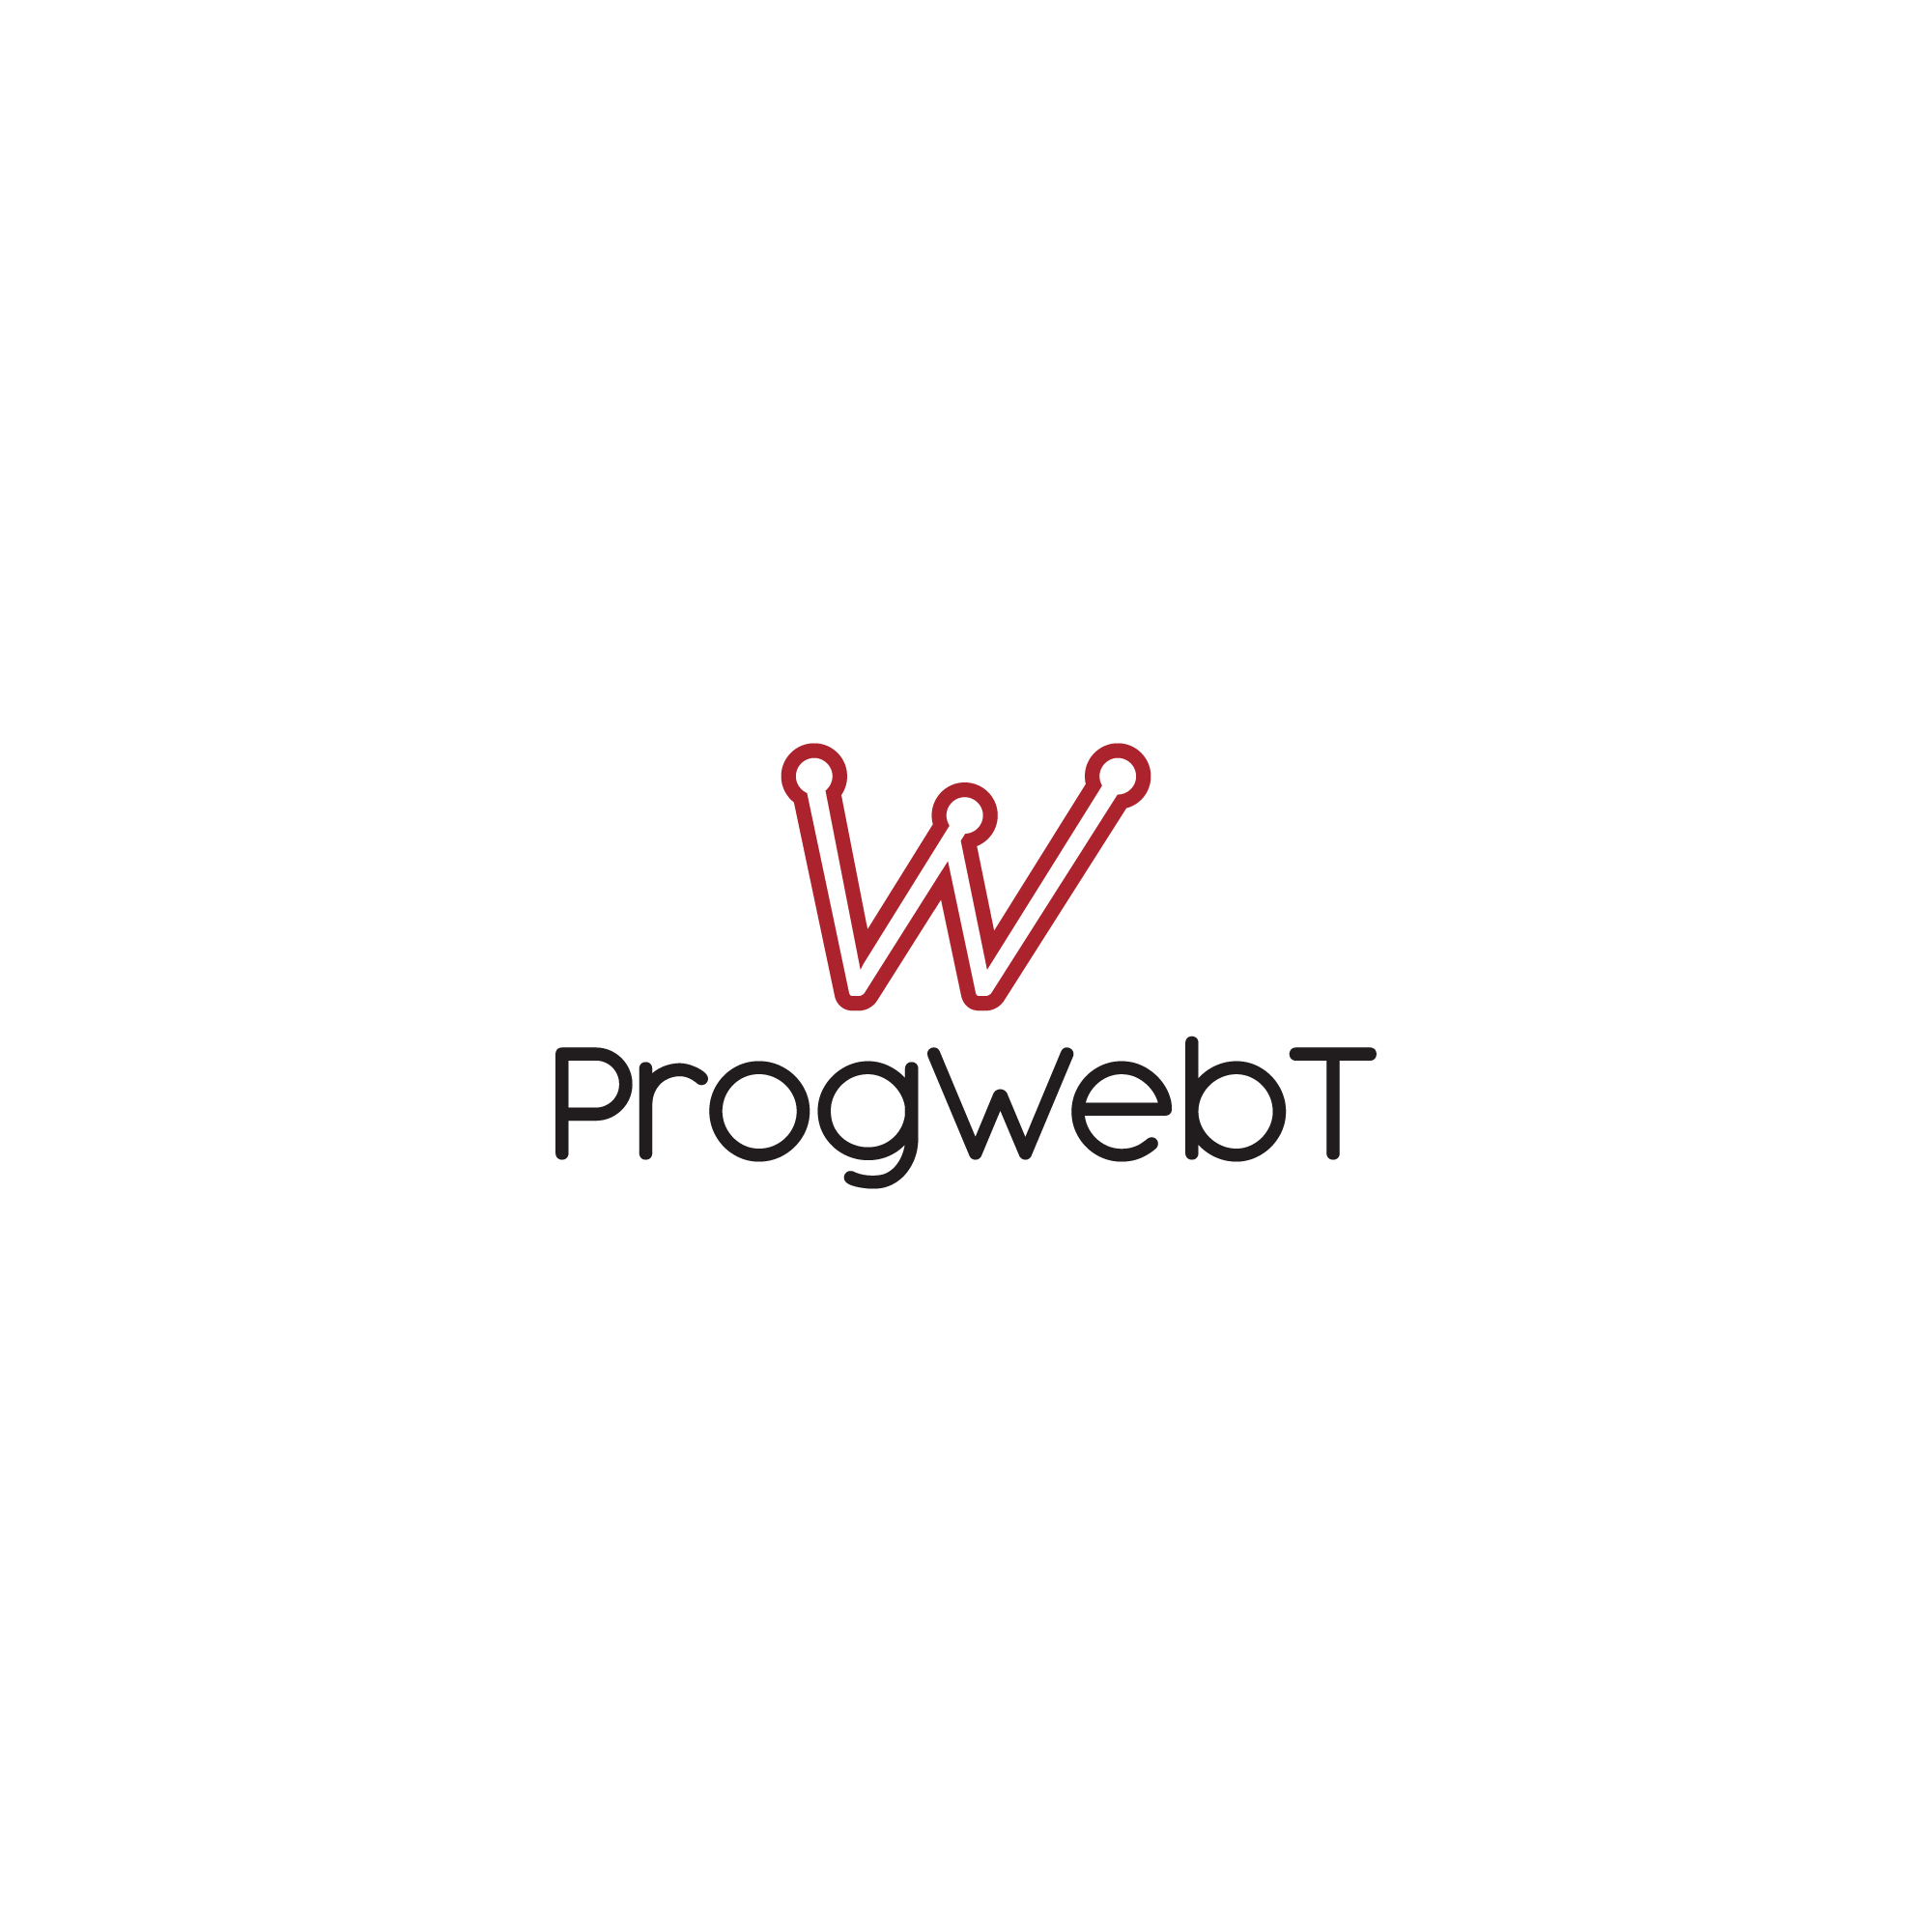 ProgWebT Wins In PTAB Trial Against Tencent, Key Patent for PWA and Mini Apps Technology having Multi-Billion Revenues